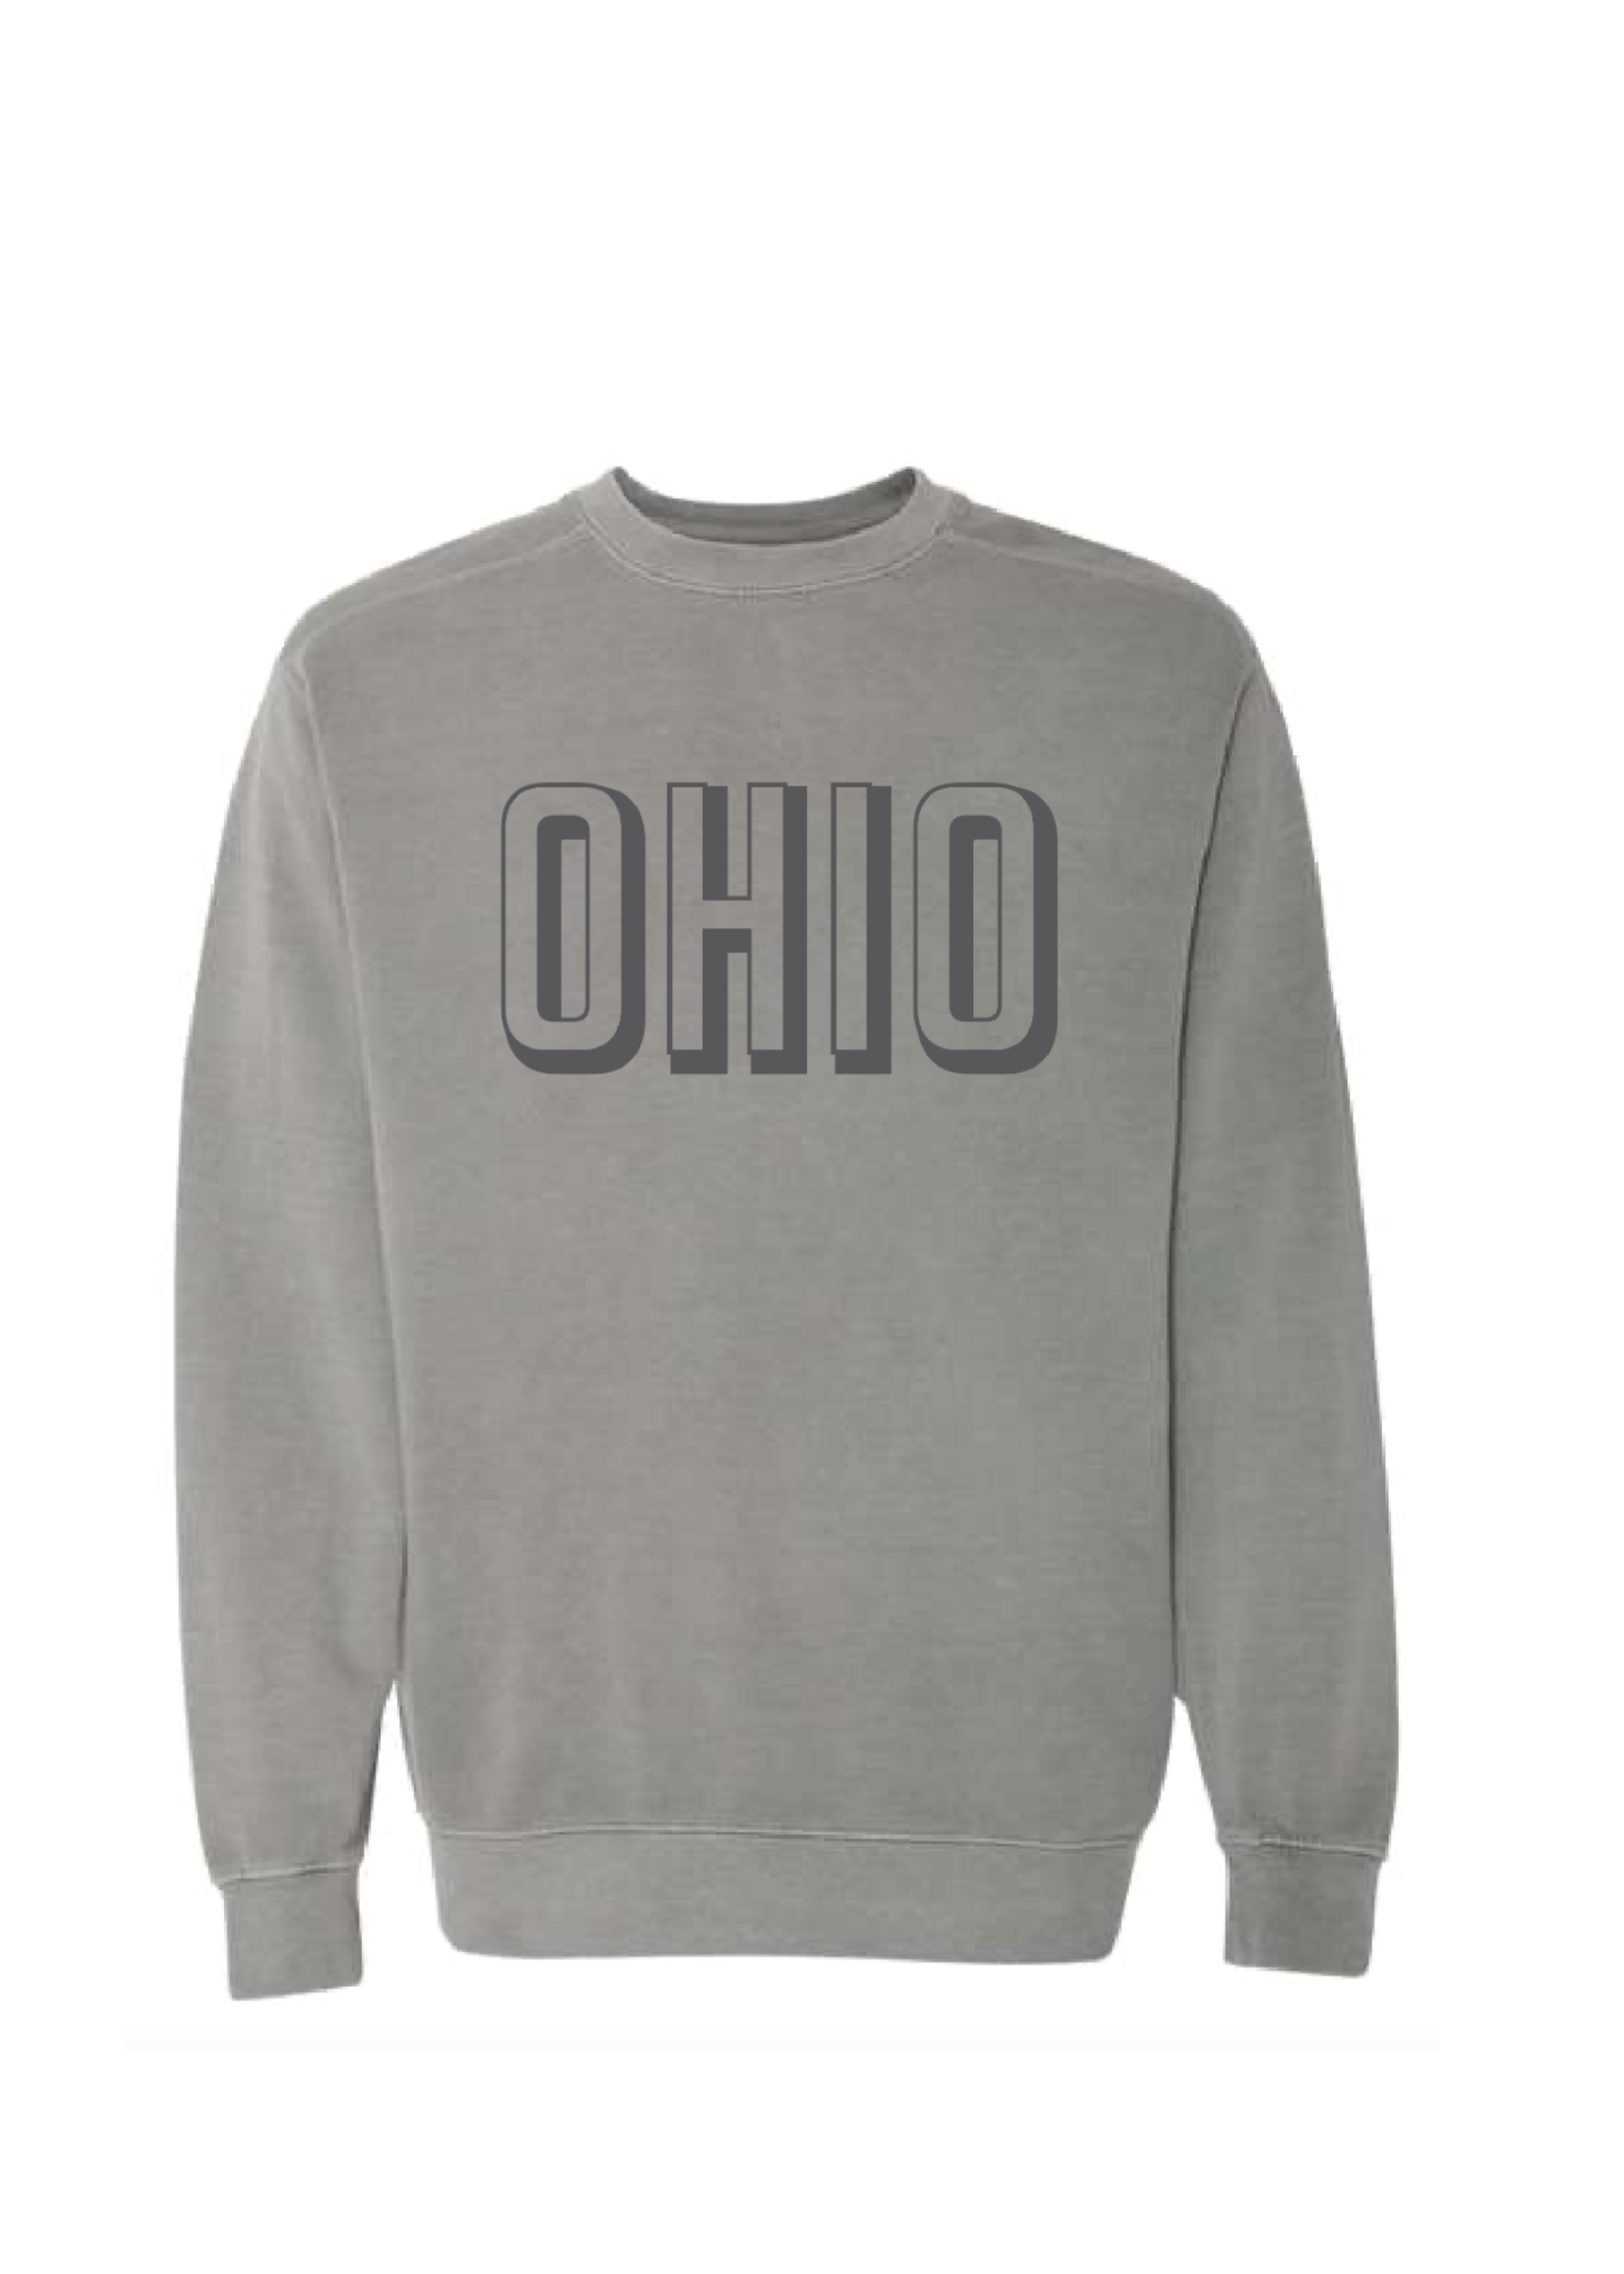 Provisions Co. OHIO - Grey Crewneck Sweatshirt